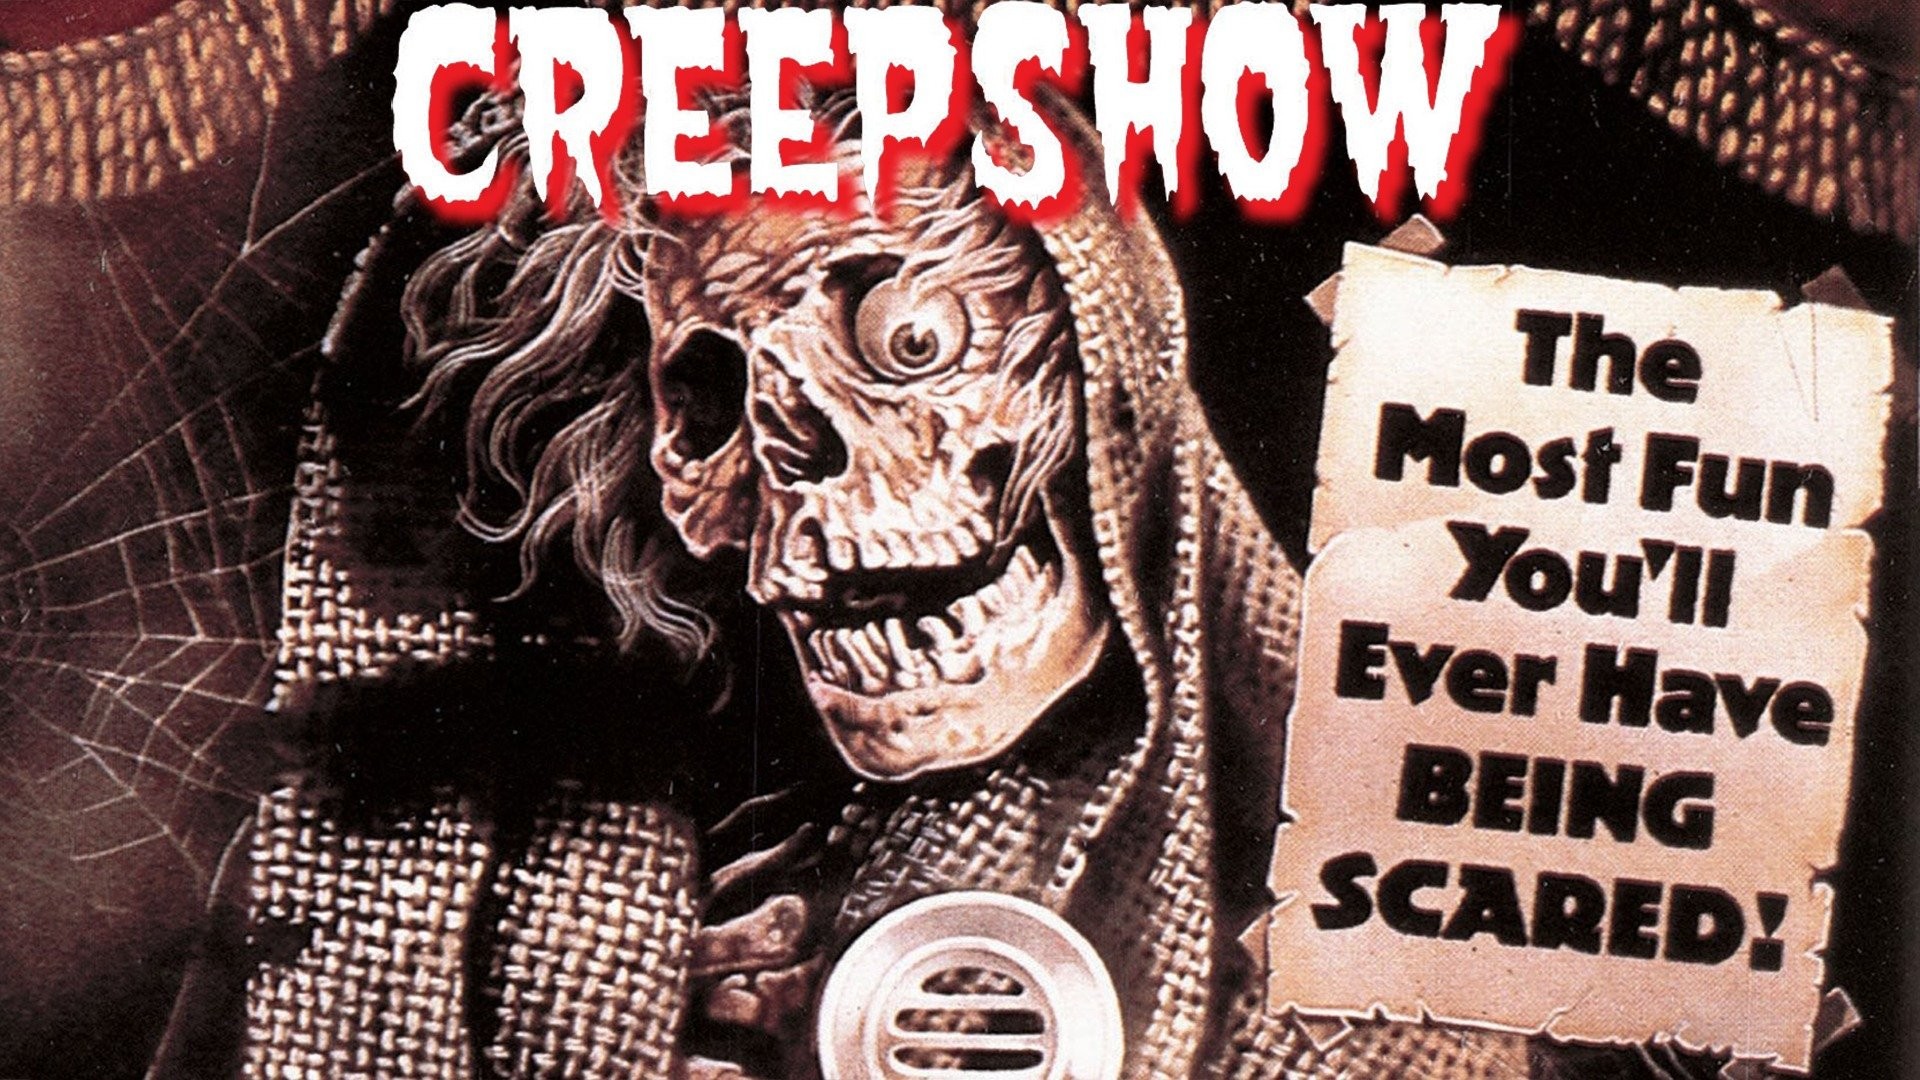 Creepshow (1982) Original 35mm Theatrical trailer on Vimeo